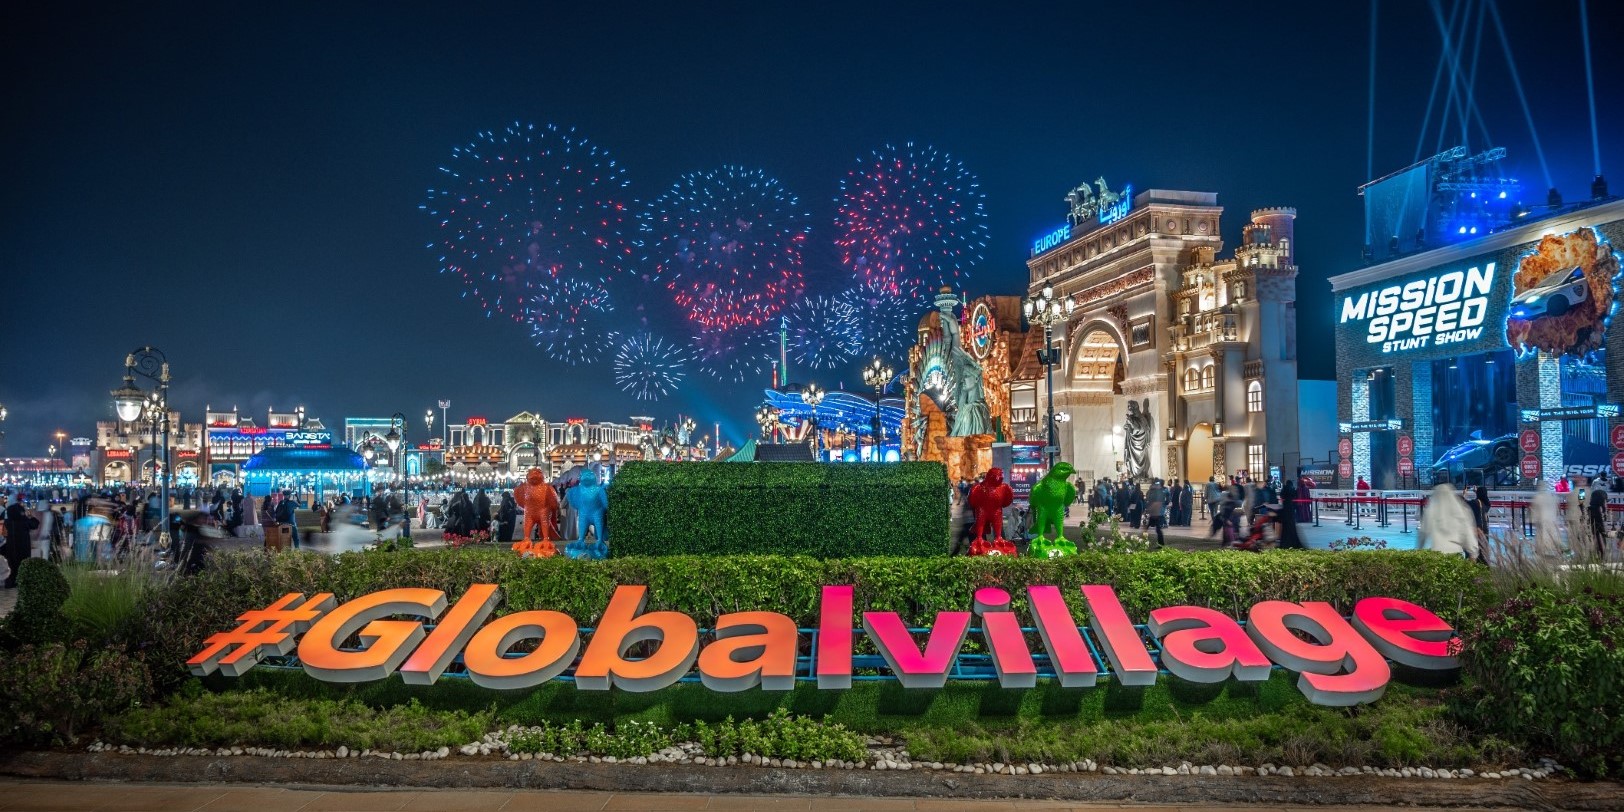 Global Village Dubai Night